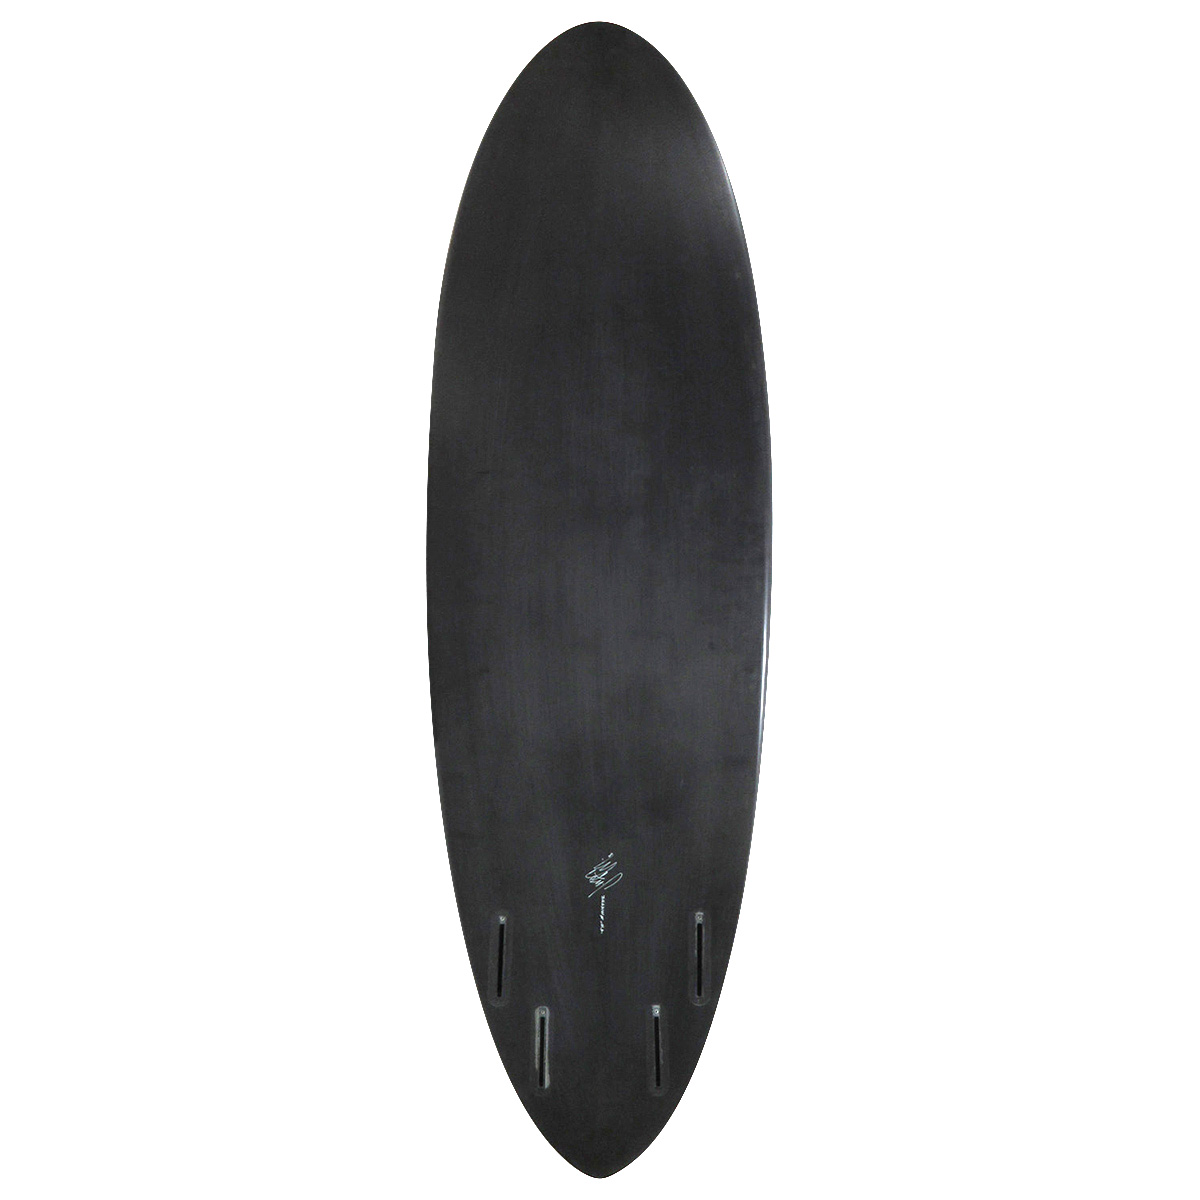 Mccallum Surfboards  / Poindexter 5'10 Shaped By Jeff Mccallum